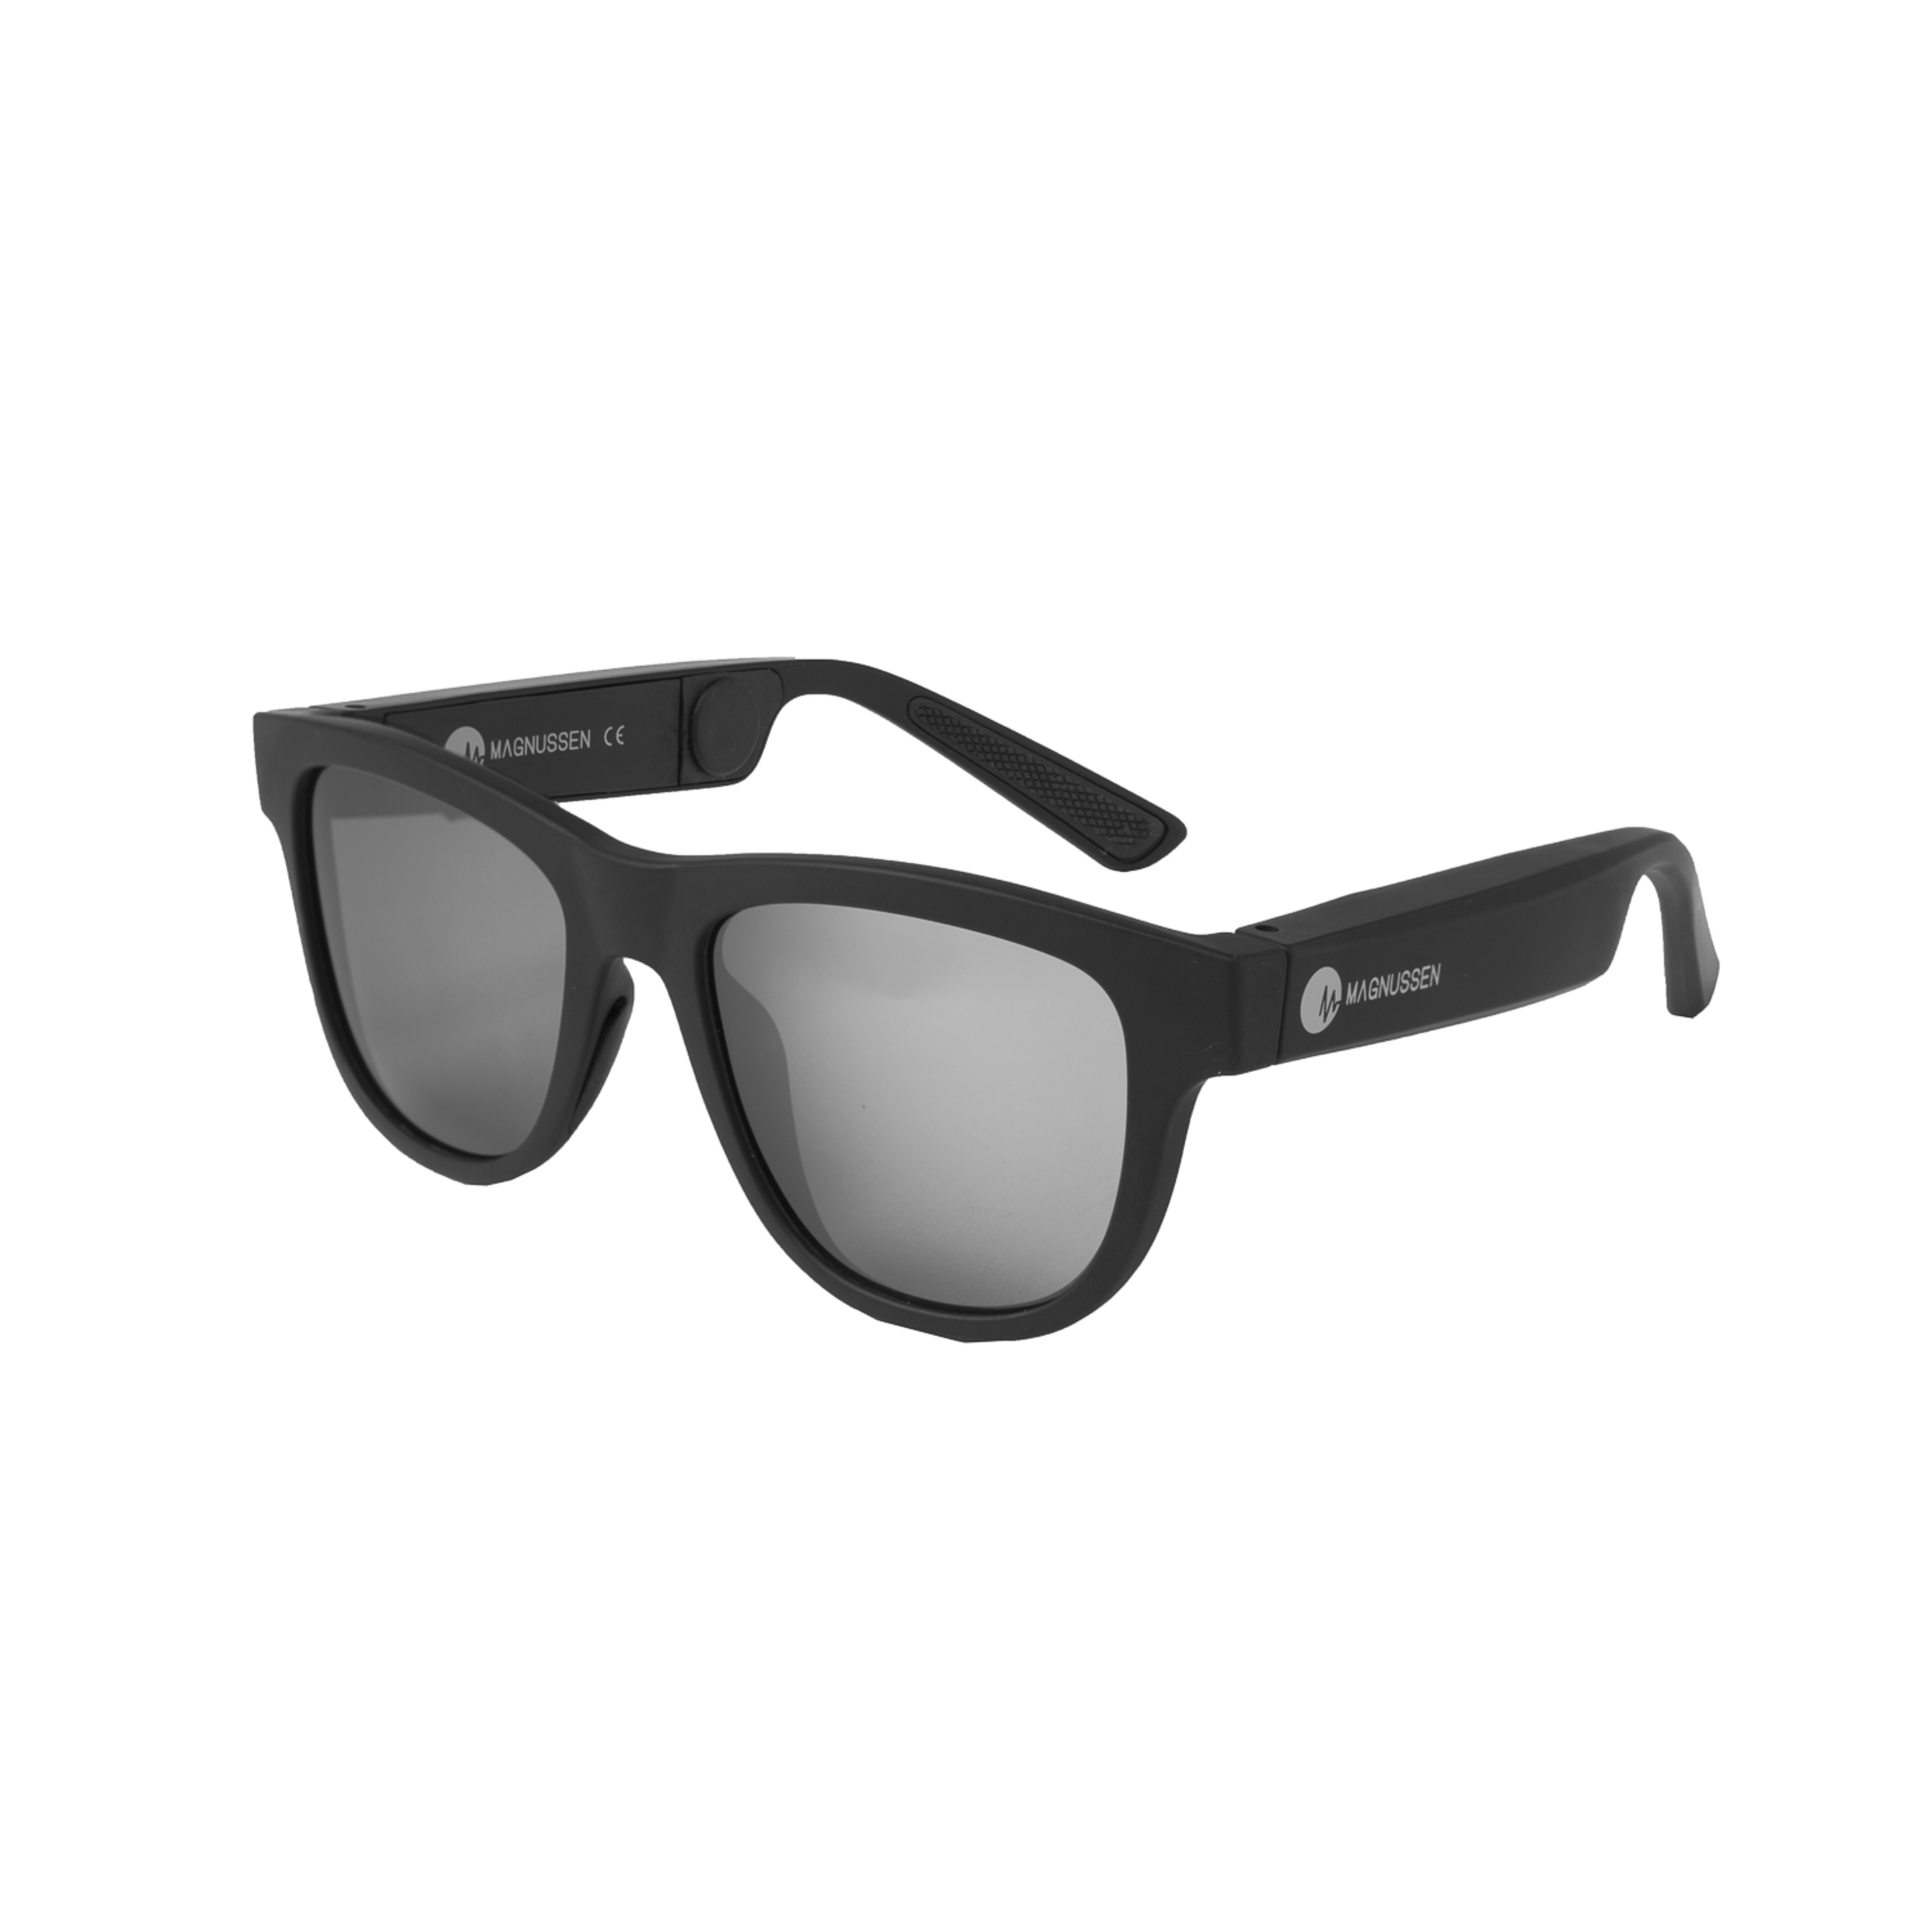 Óculos De Sol Magnussen G1 Bluetooth - negro - 